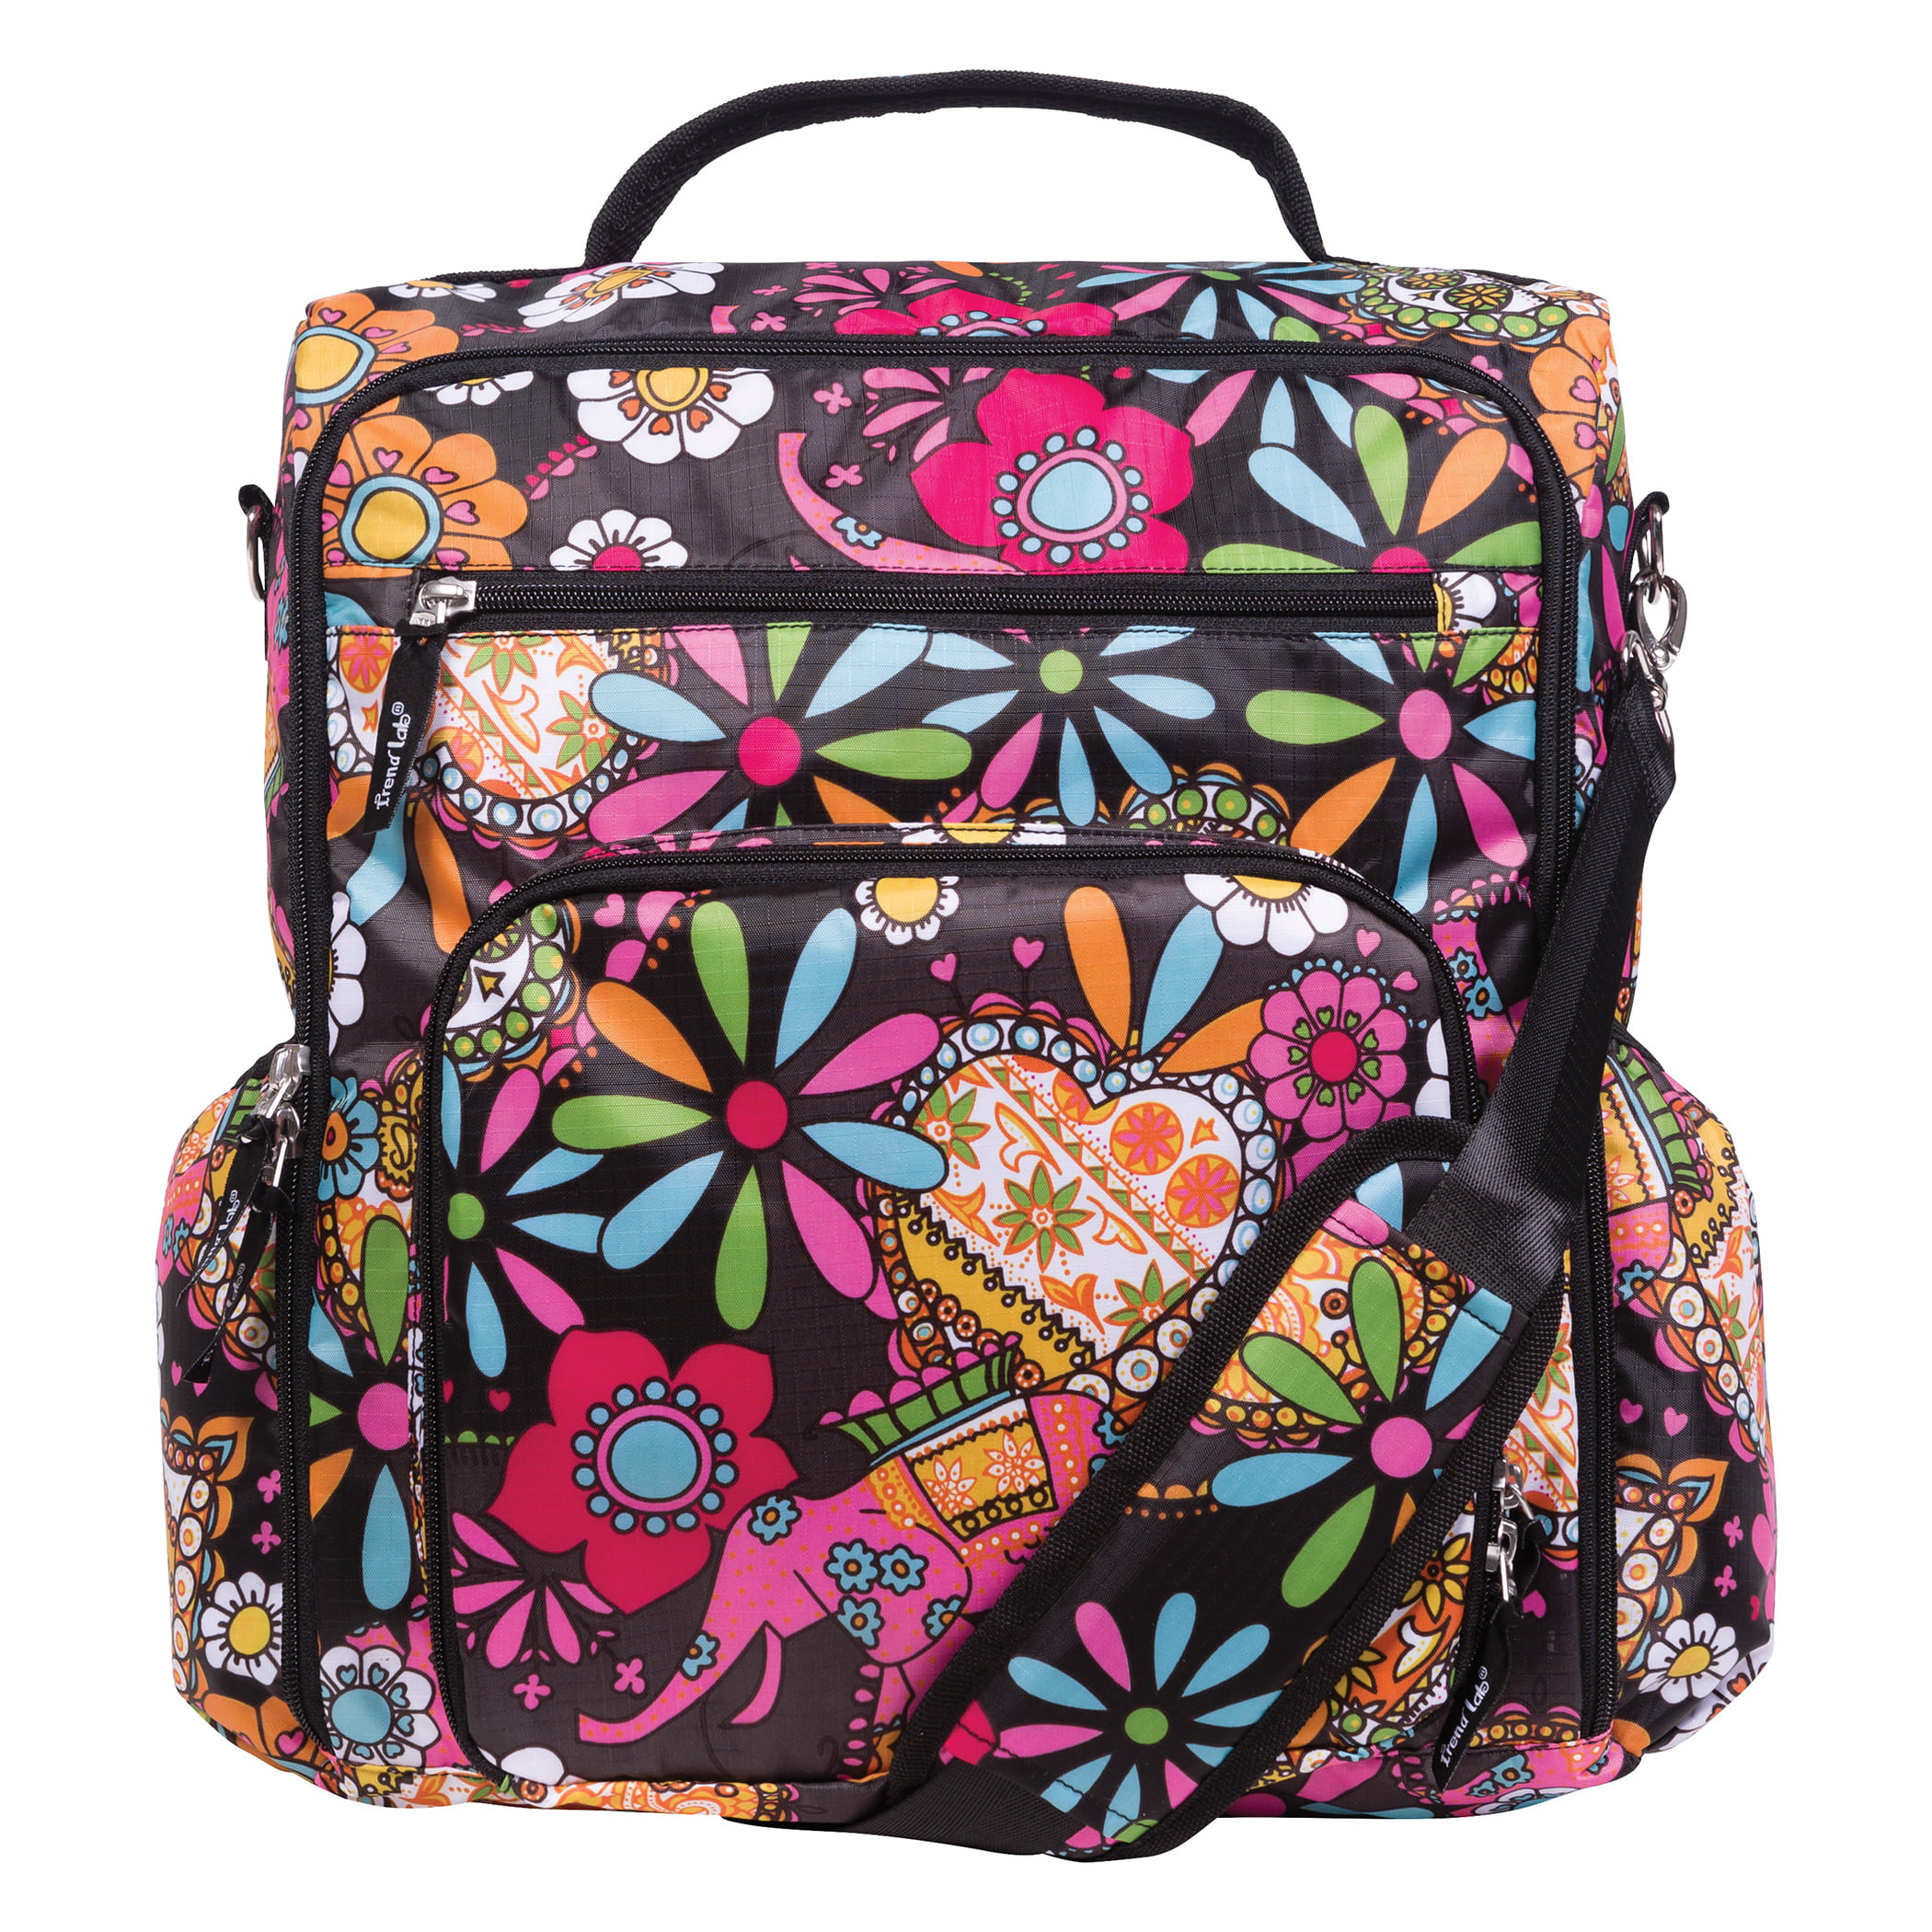 Bohemian Floral Convertible Backpack Diaper Bag - nrd.kbic-nsn.gov